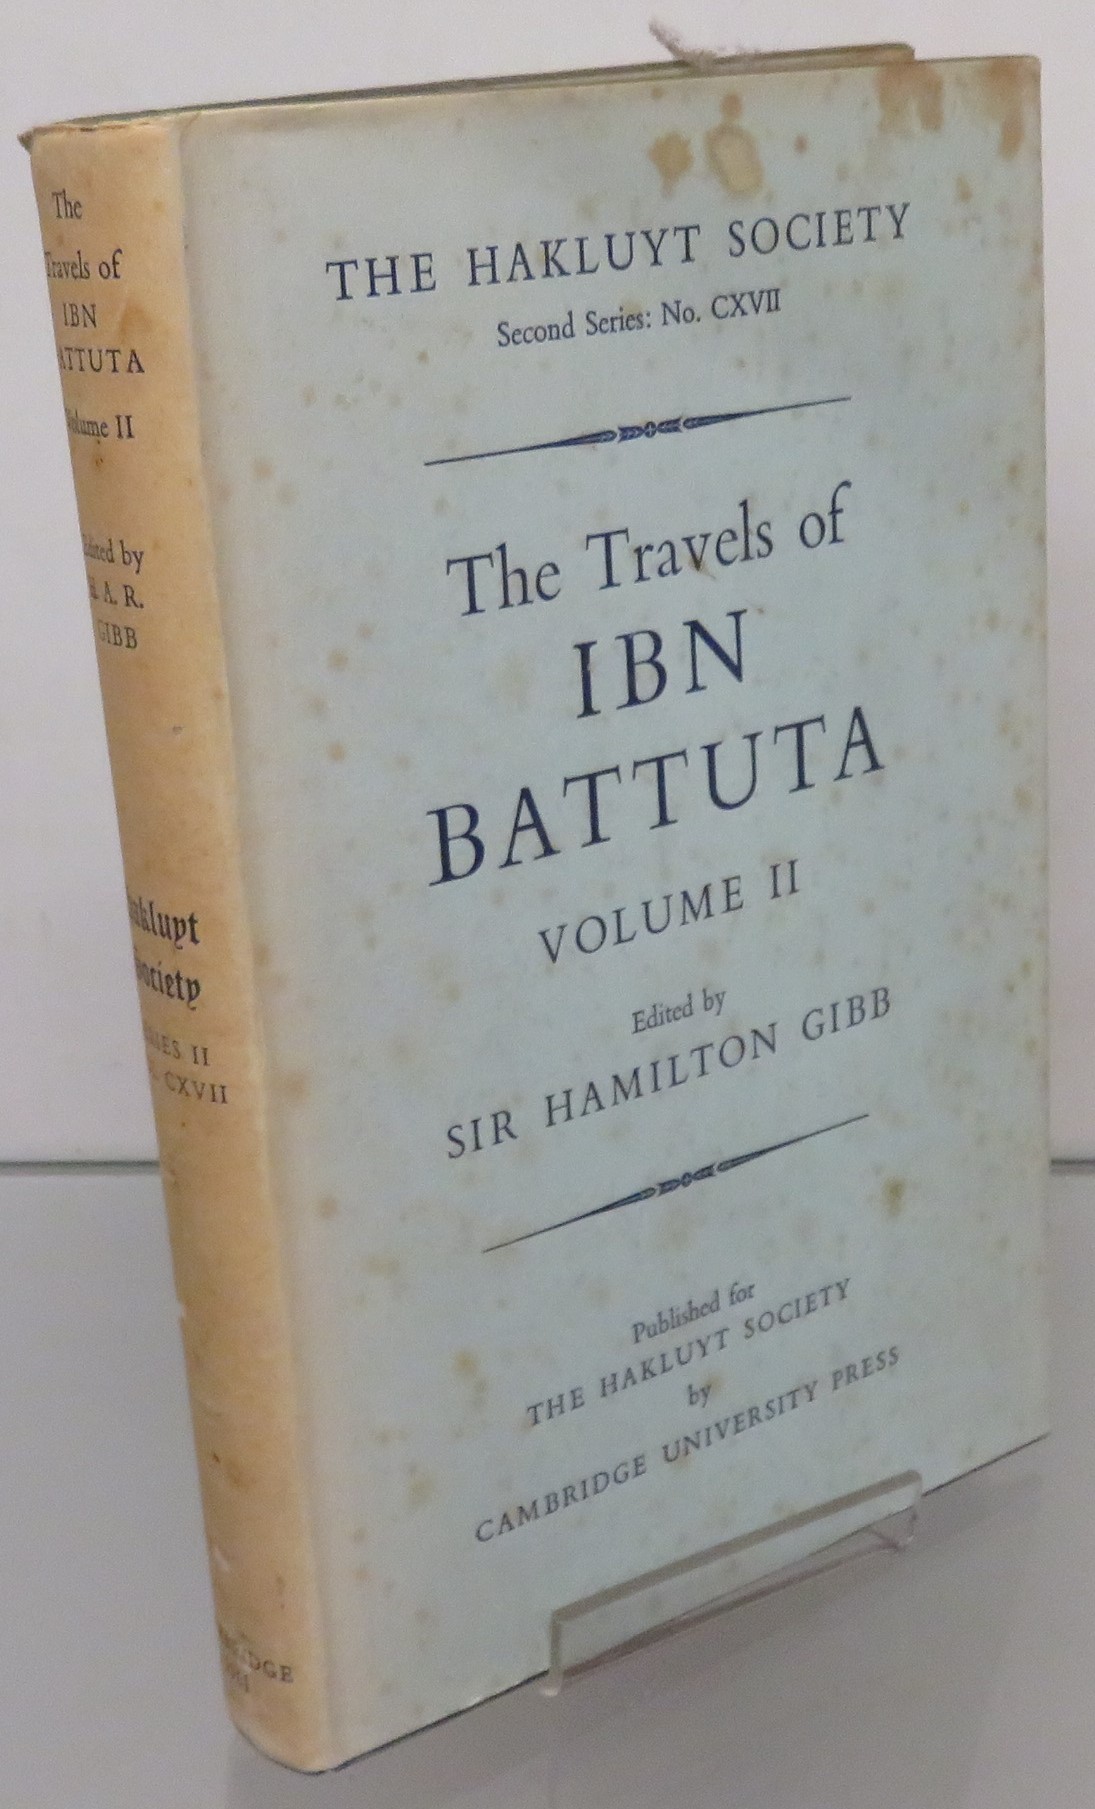 The Travels of IBN BATTUTA Volume II